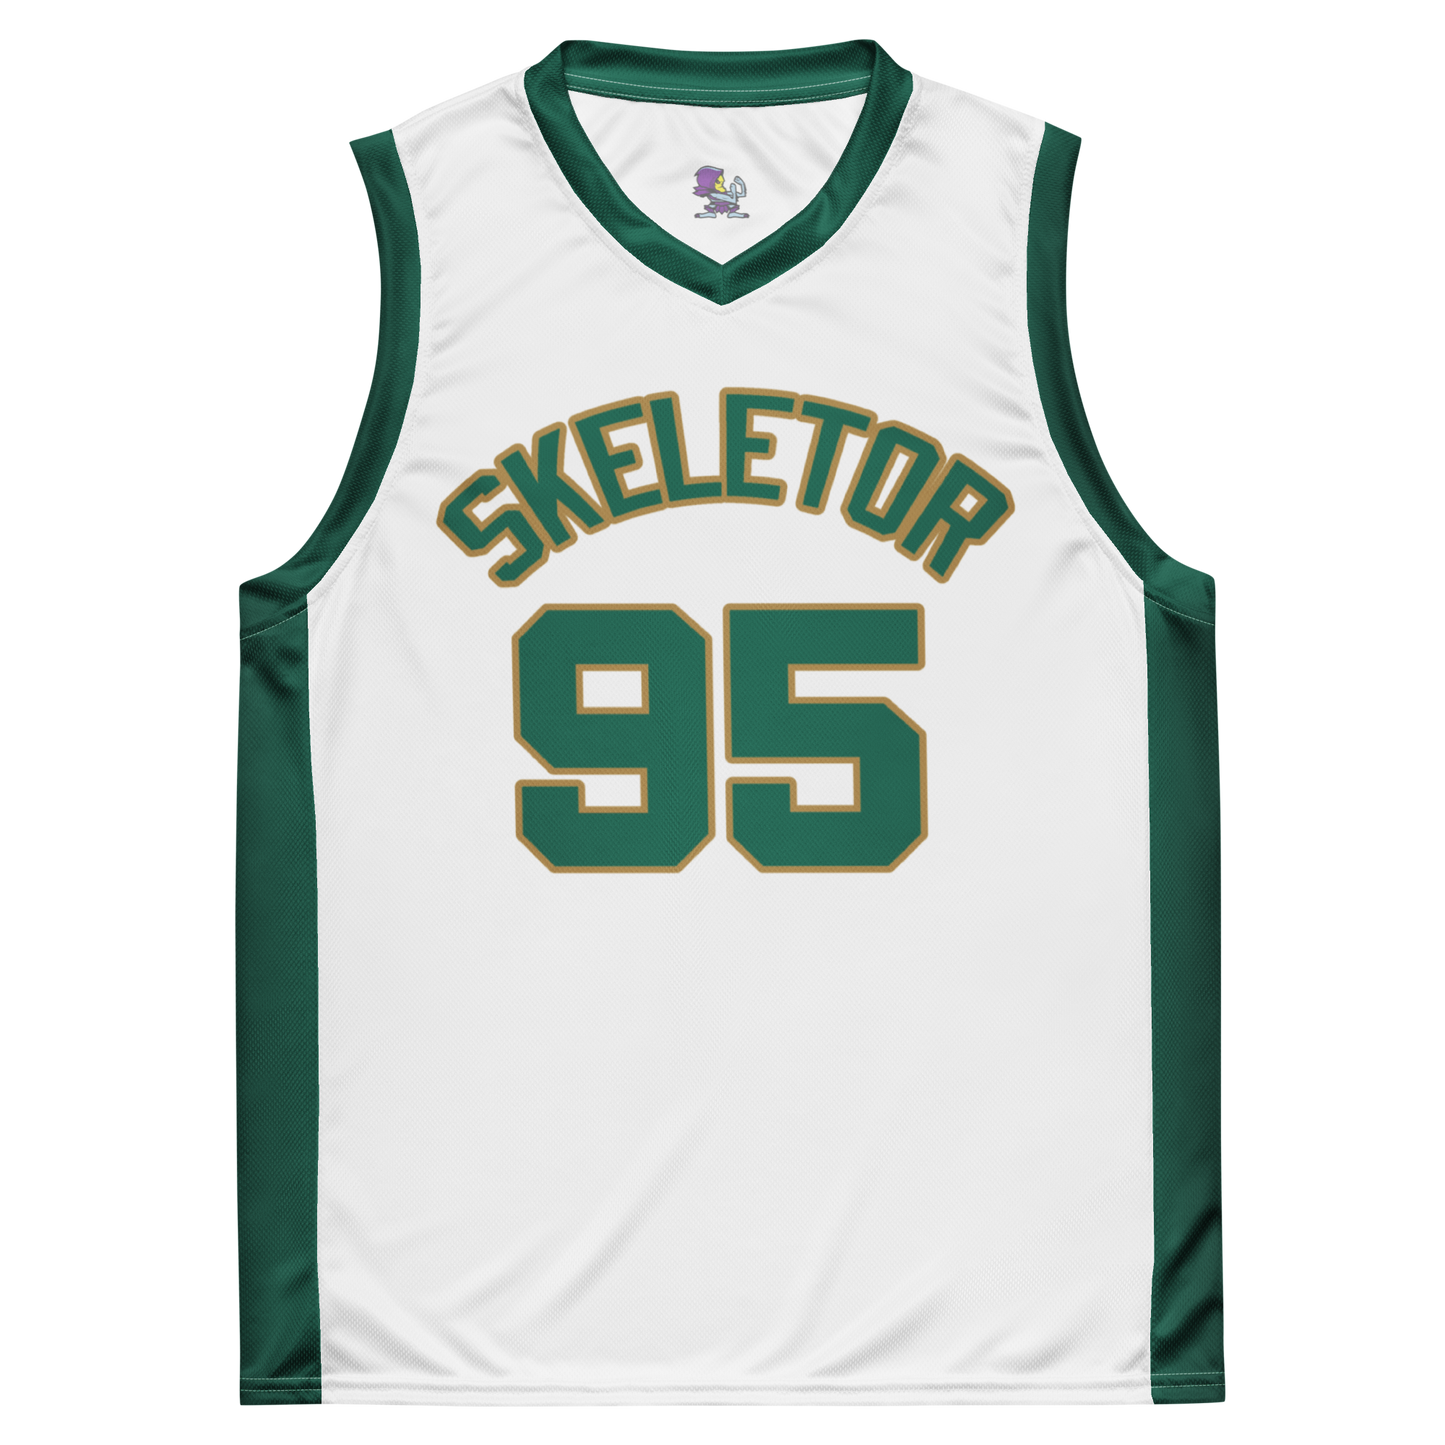 Boston X Skeletor Basketball Jersey 2.0